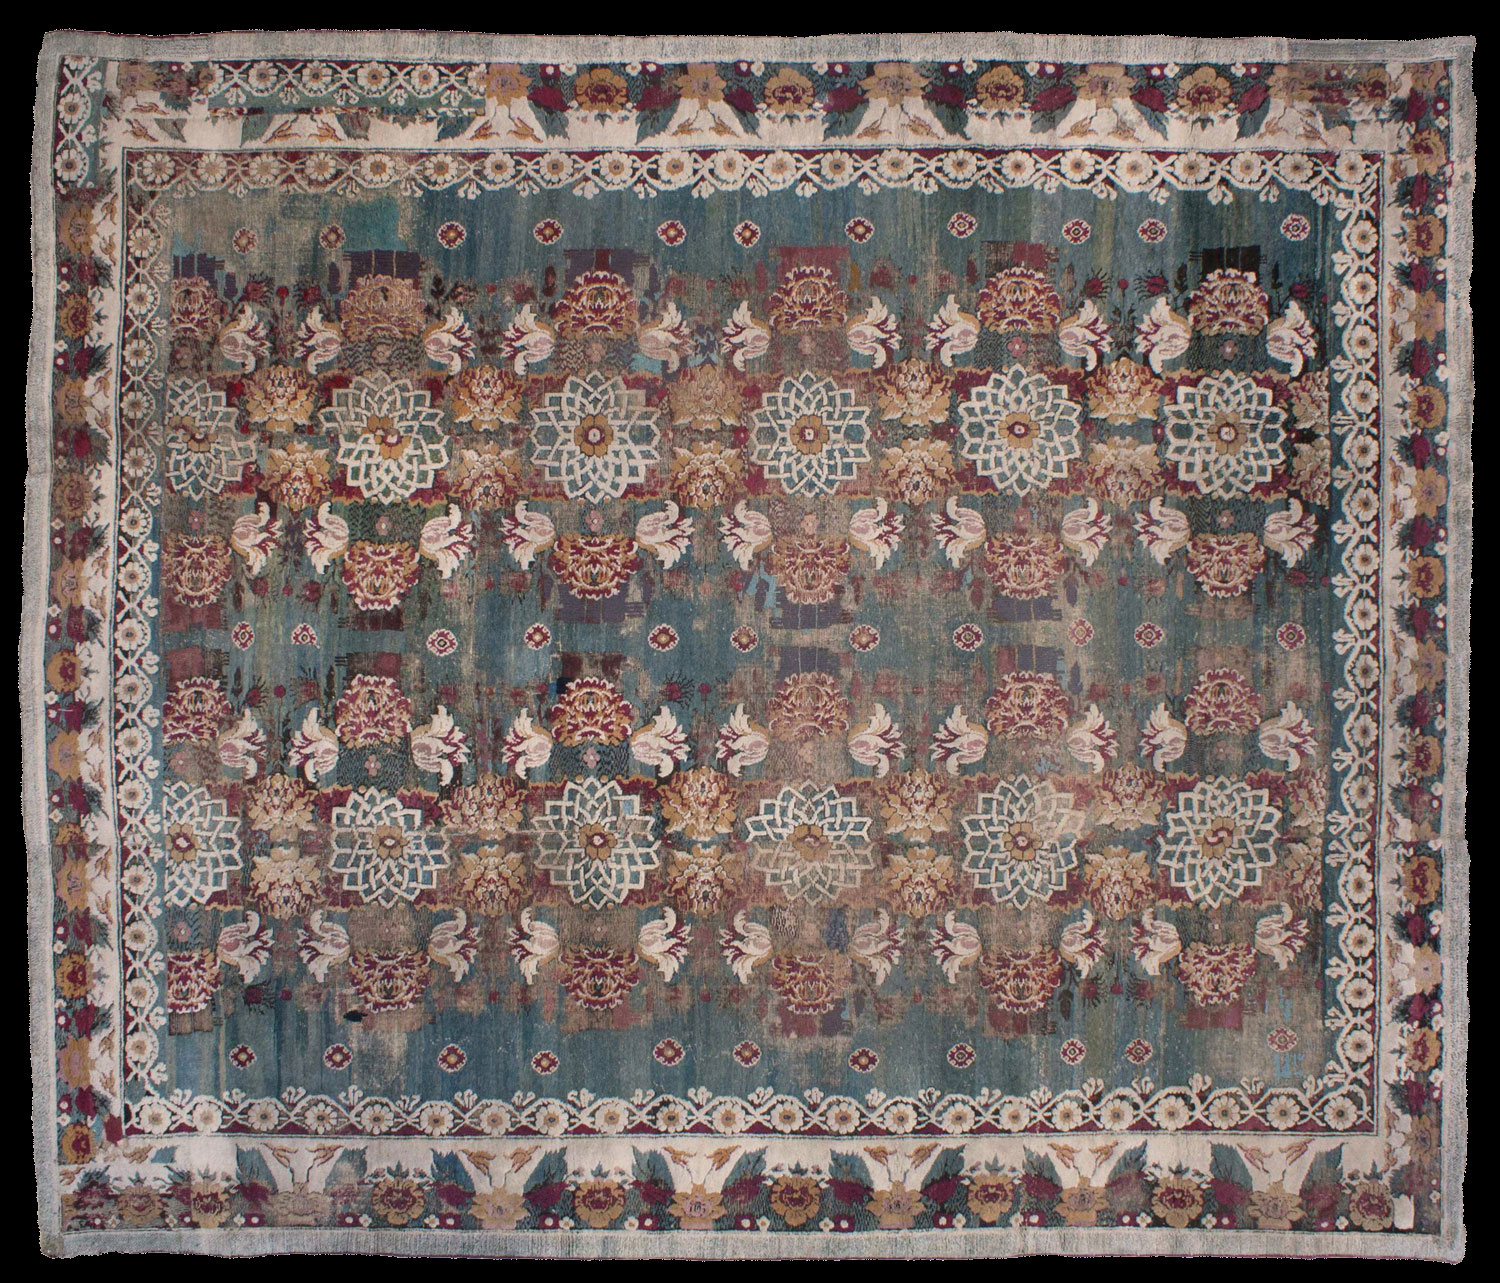 Antique amritsar Carpet - # 53023